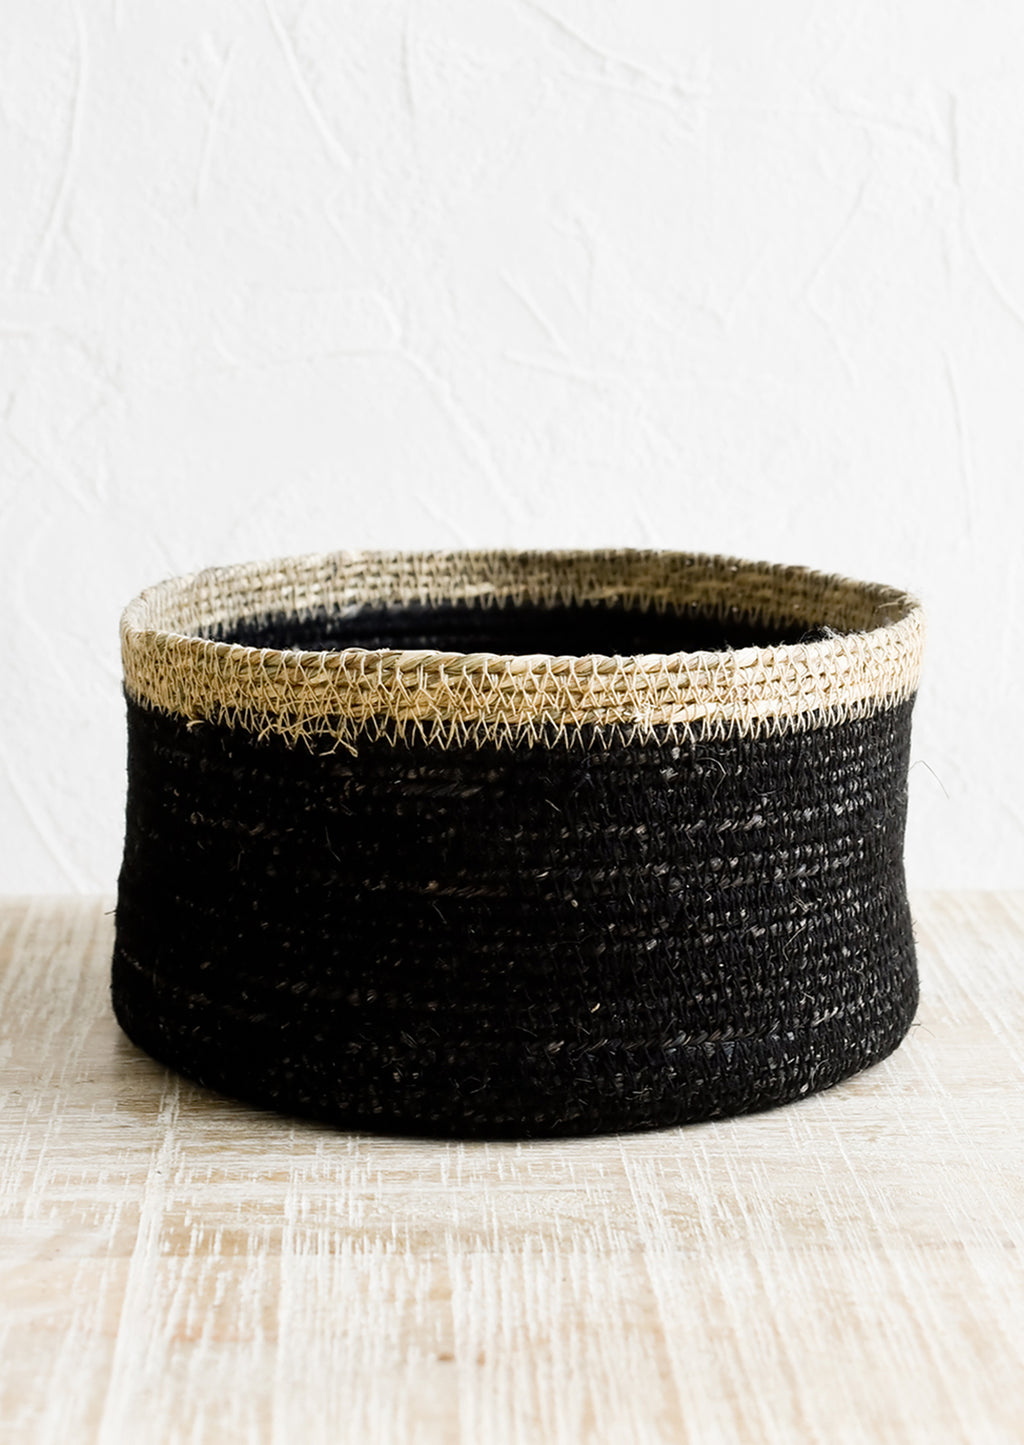 2: A shallow circular basket in black with tan rim.